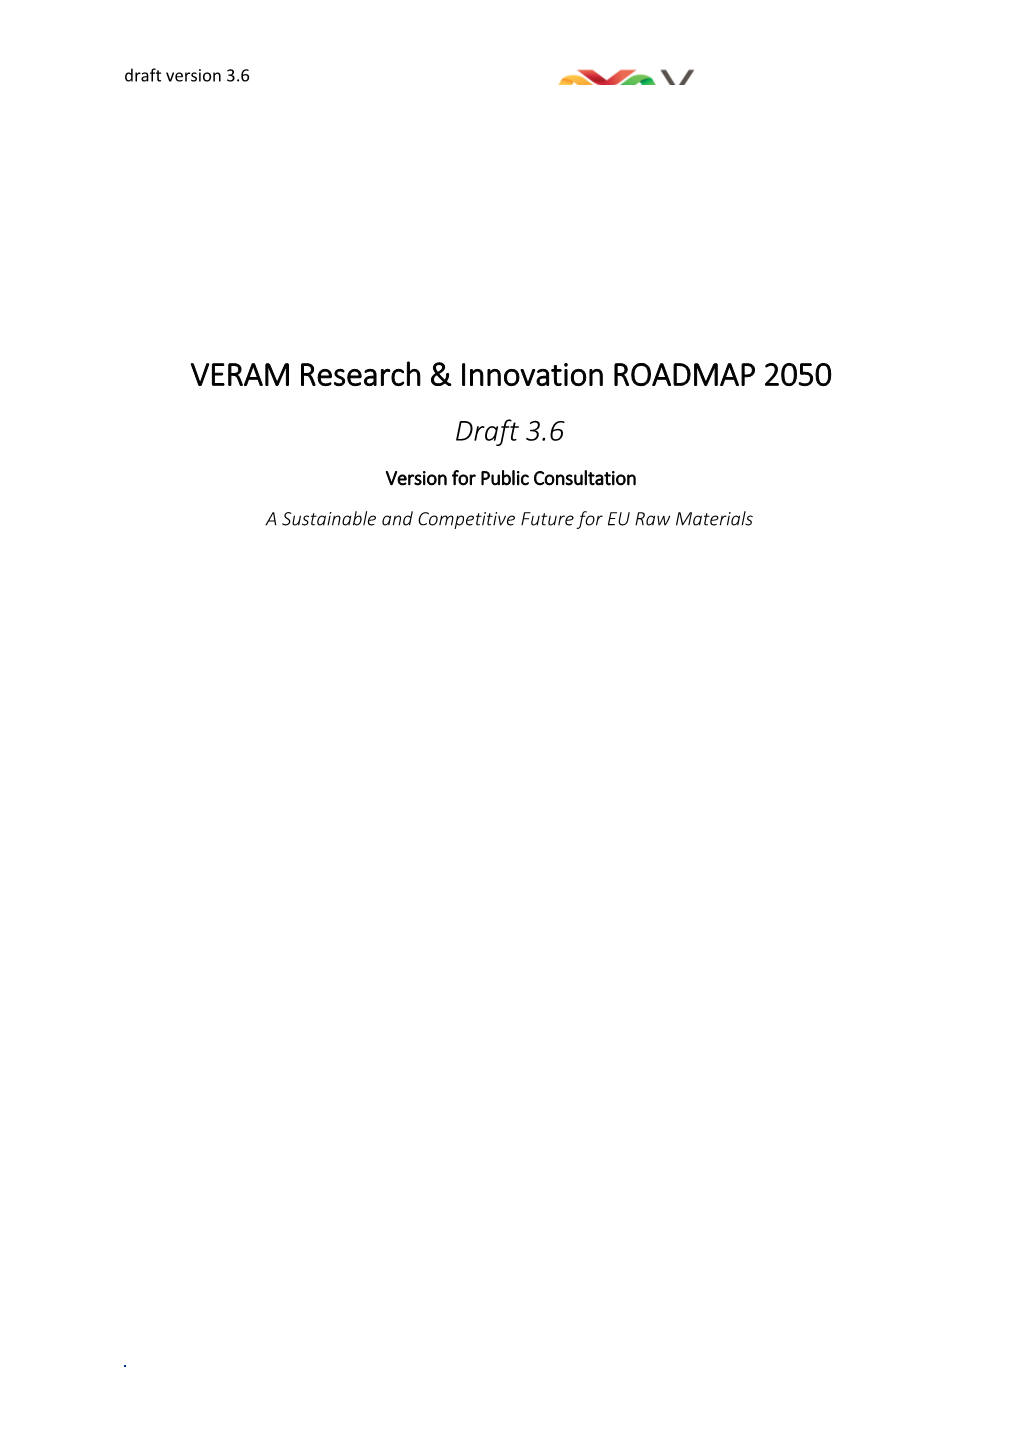 VERAM Research & Innovation ROADMAP 2050